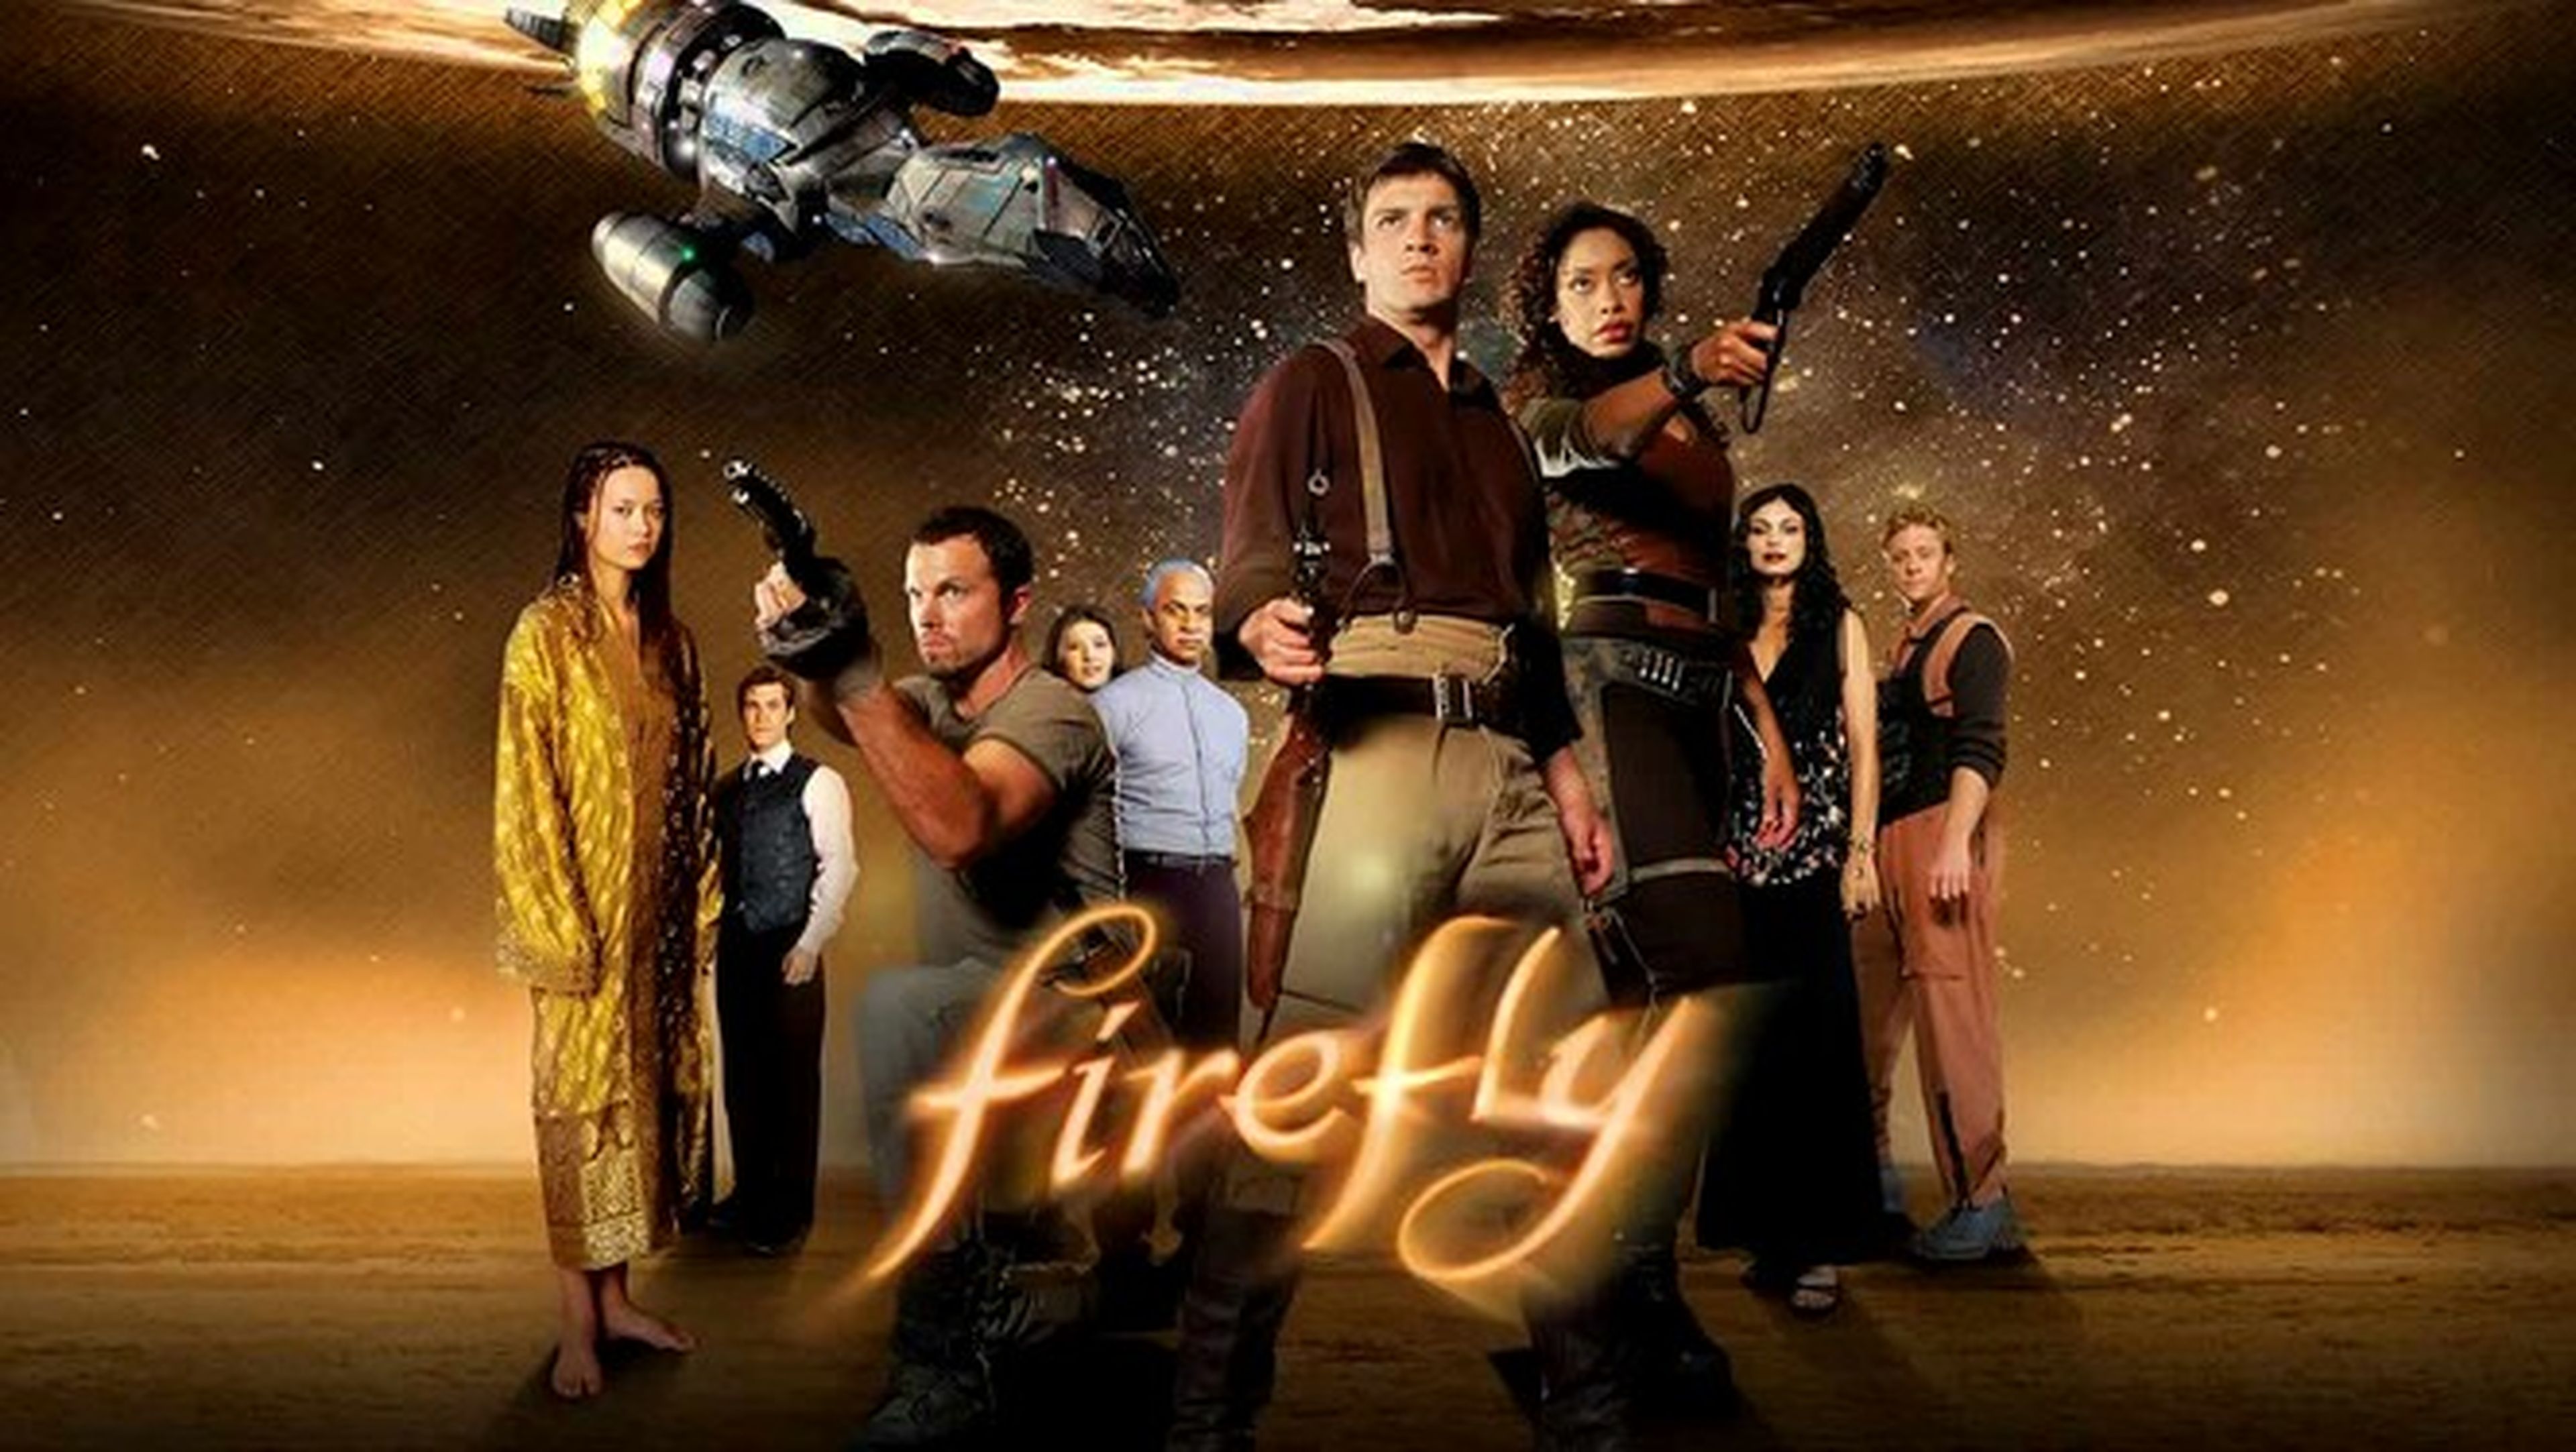 Firefly - 10 motivos para verla en Netflix